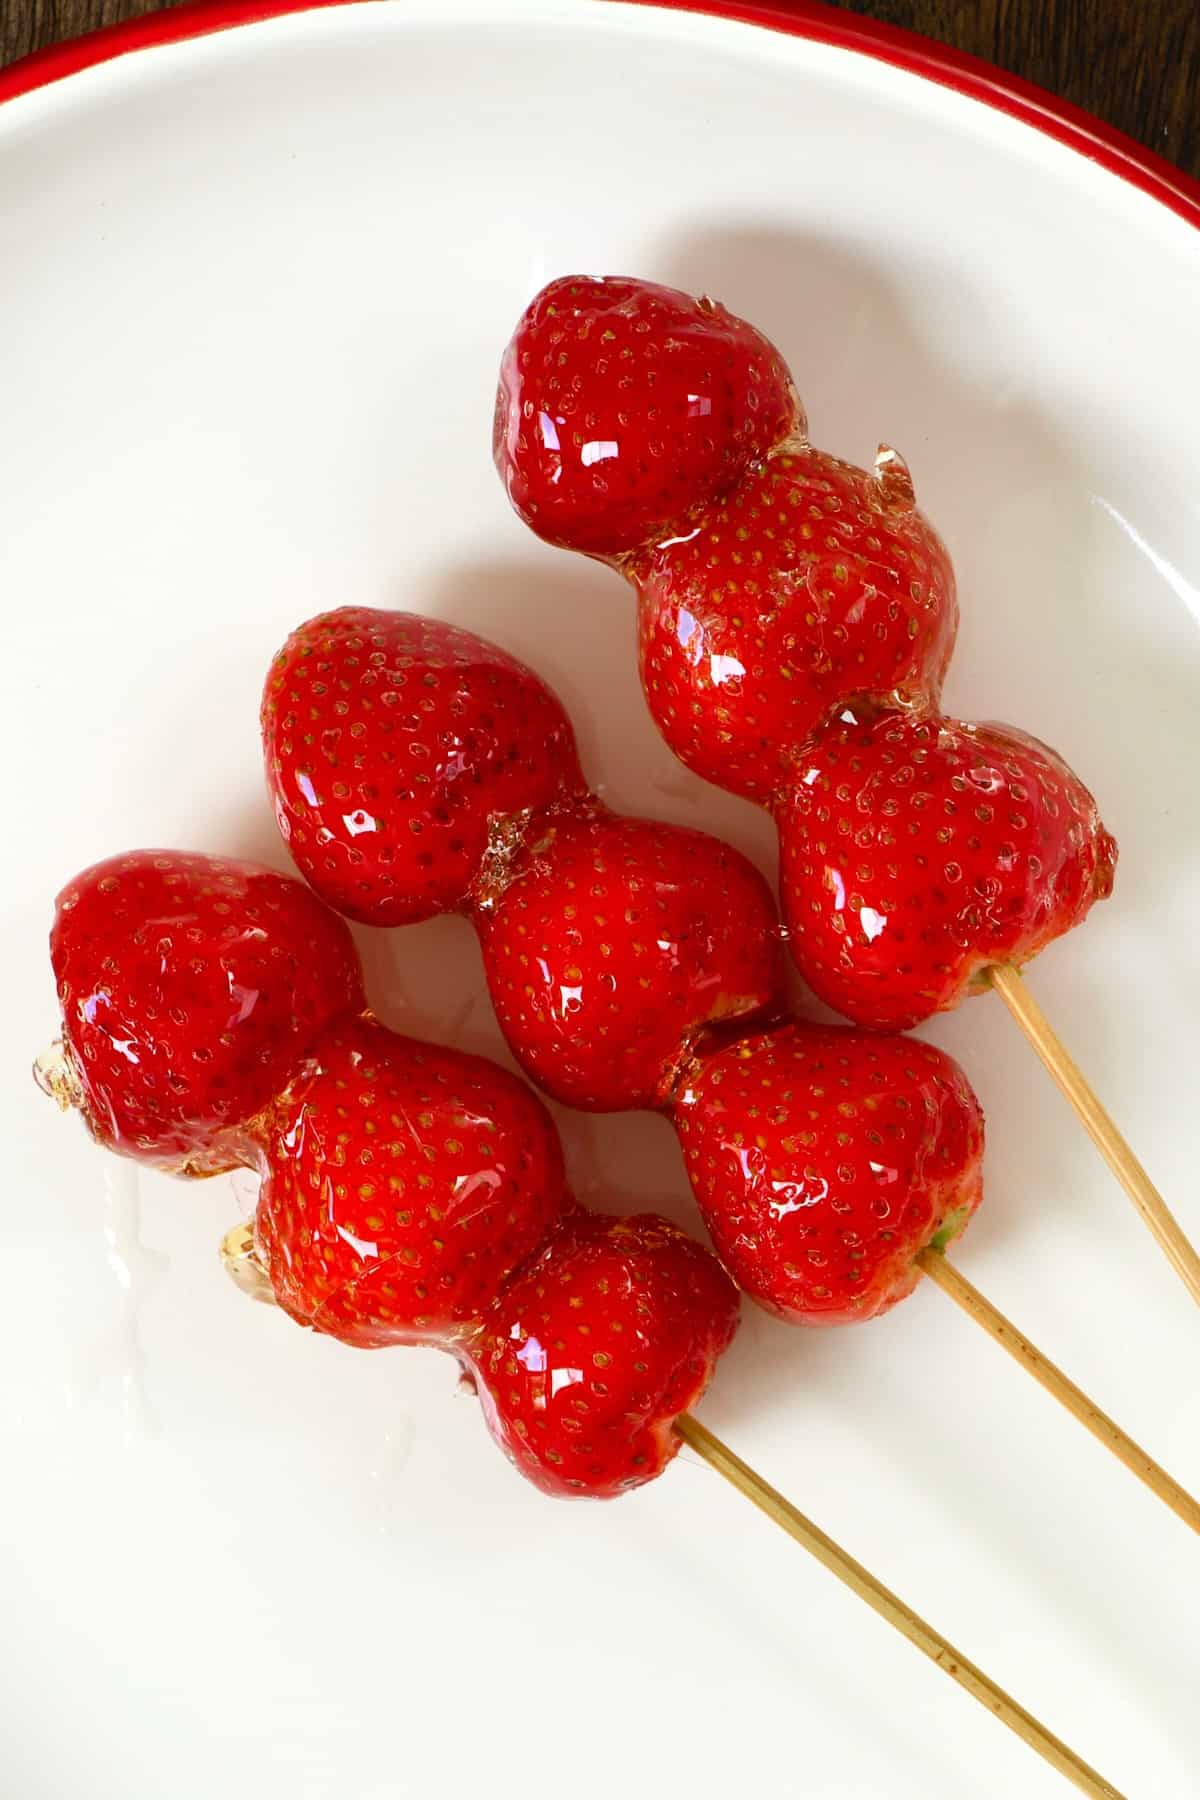 Strawberry tanghulu on a plate